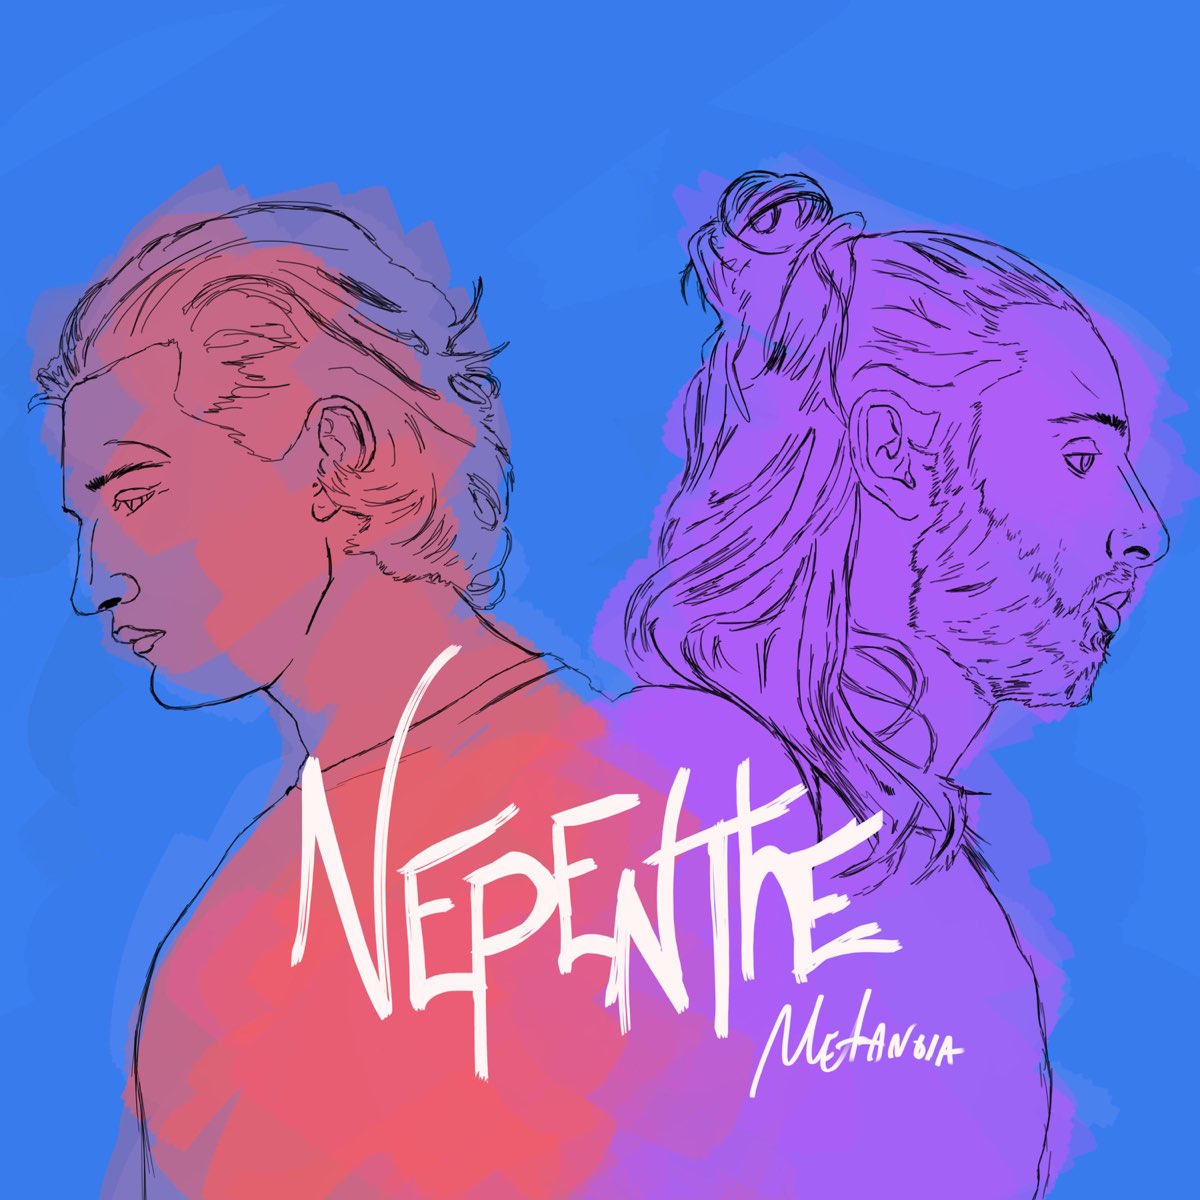 ‎Metanoia - EP - Album by Nepenthe - Apple Music